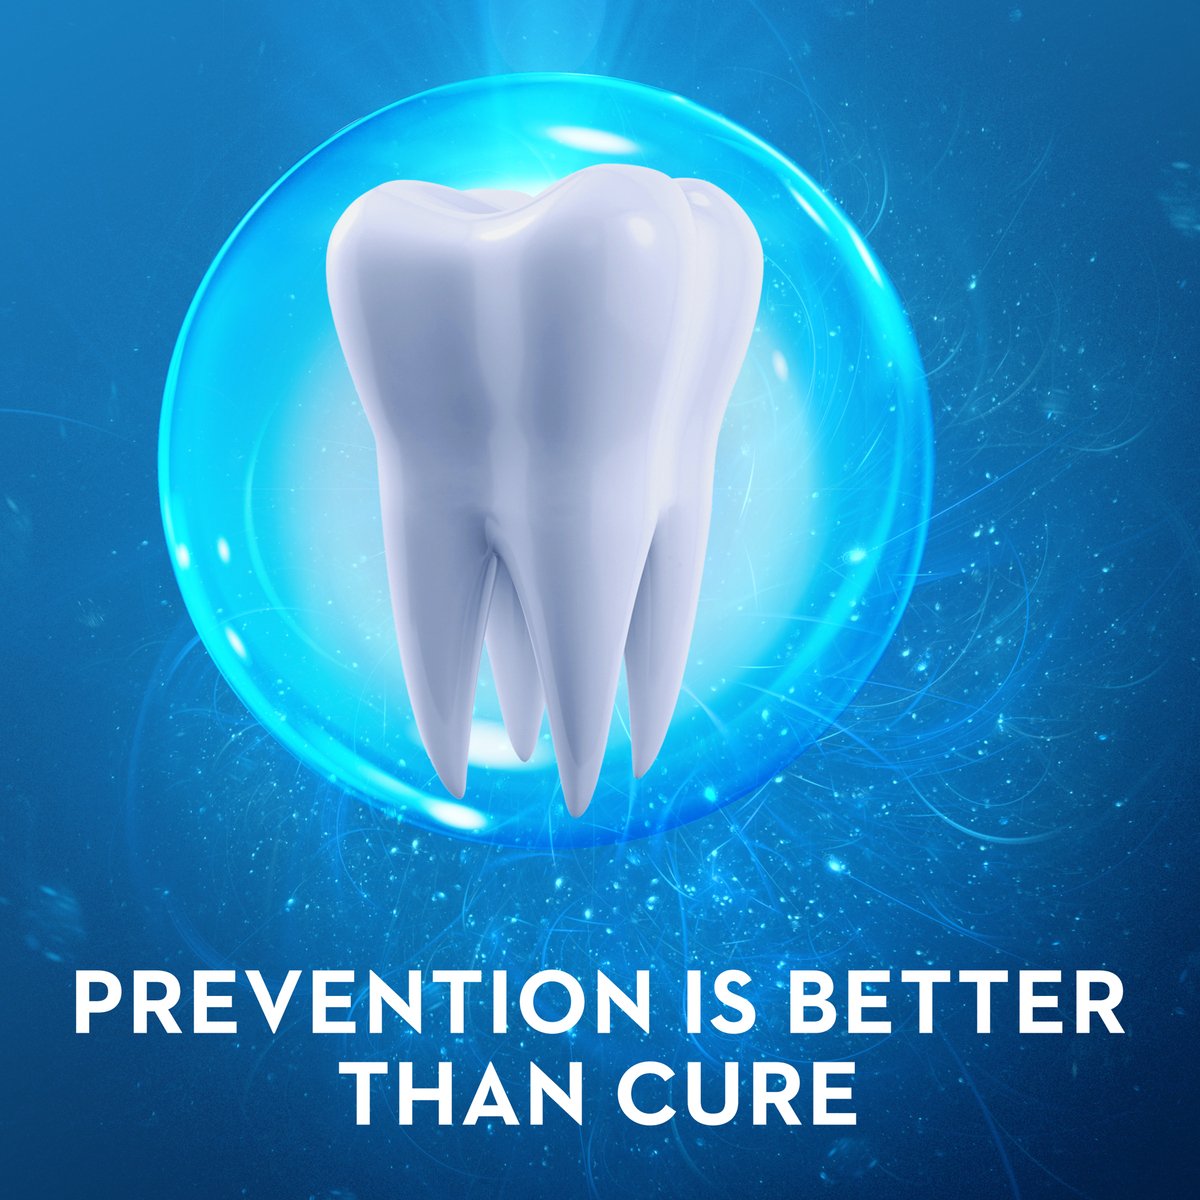 Oral B Pro-Expert Whitening Toothpaste 75 ml